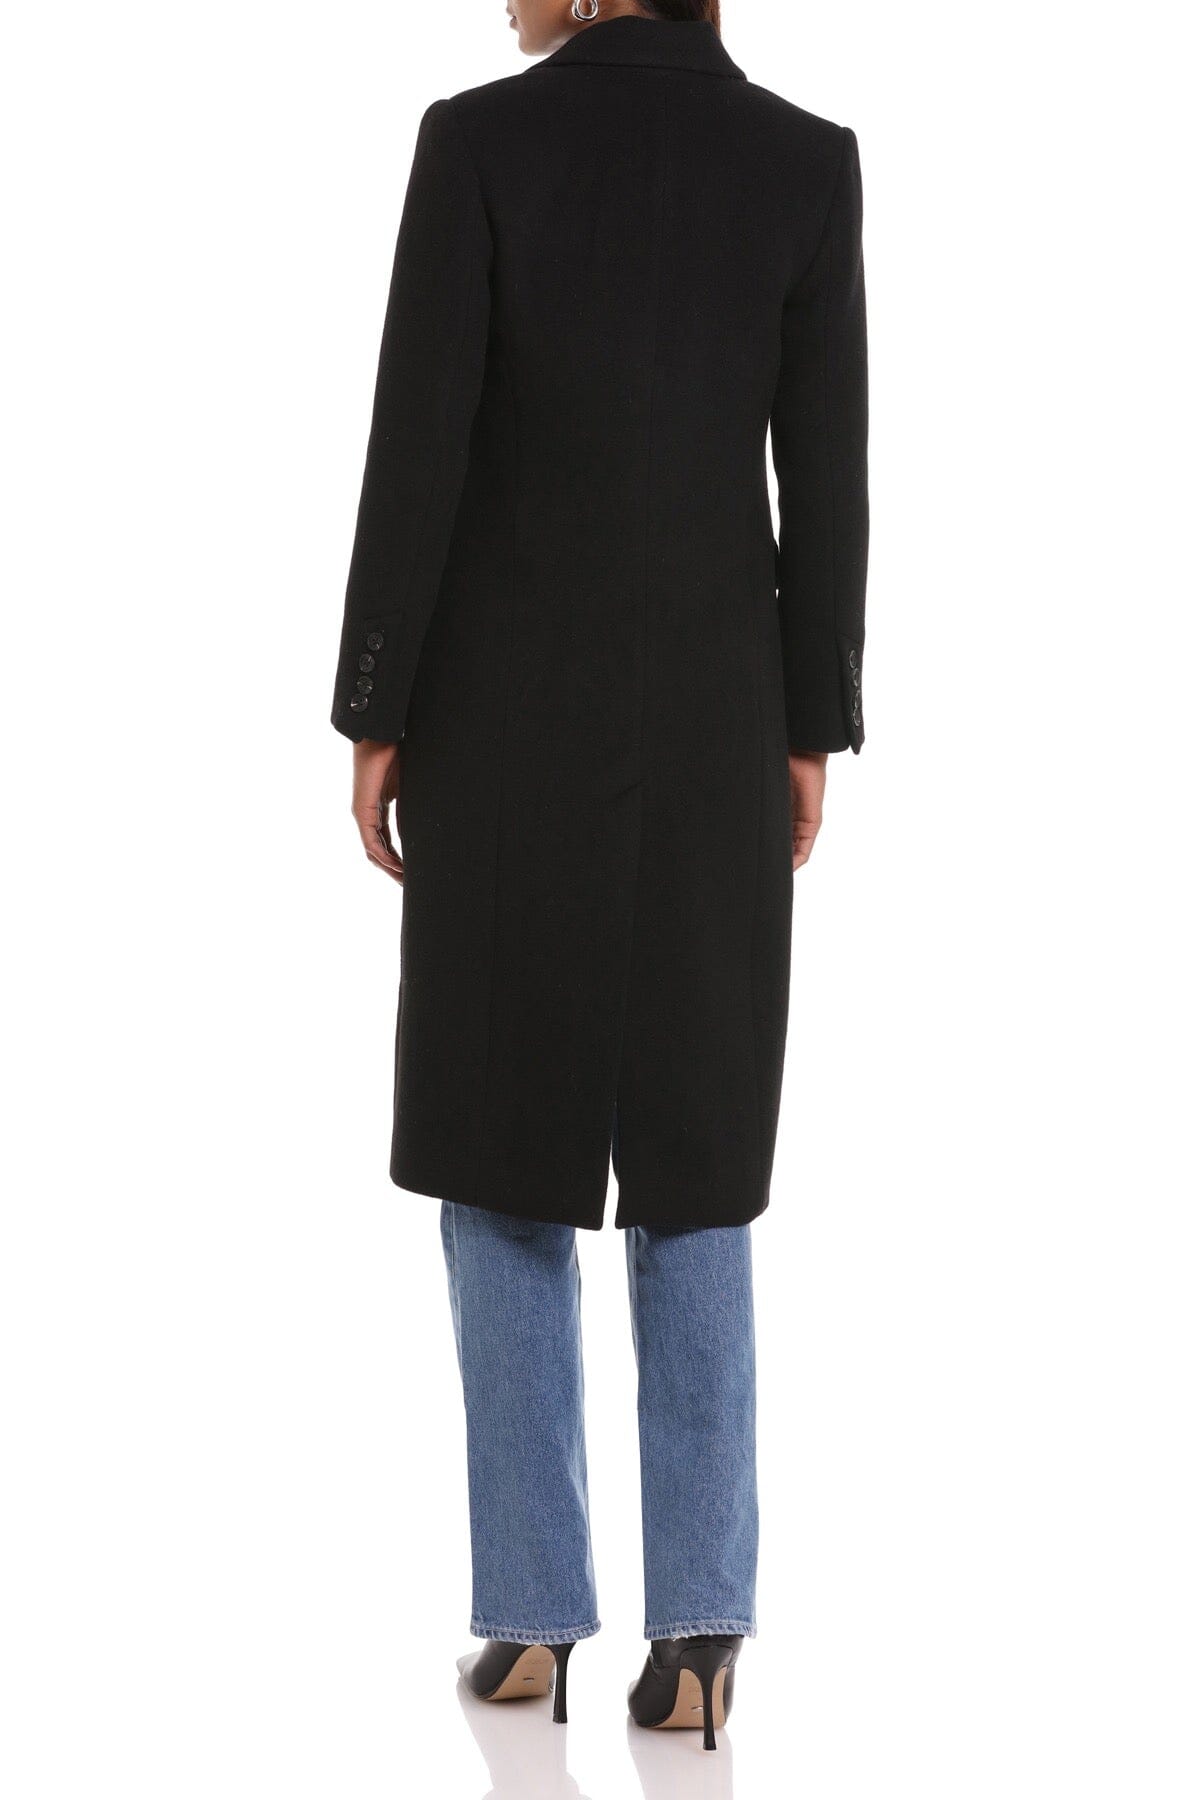 Black wool blend double breasted tailored coat jacket - women's figure flattering fall 2023 fashion coats jackets